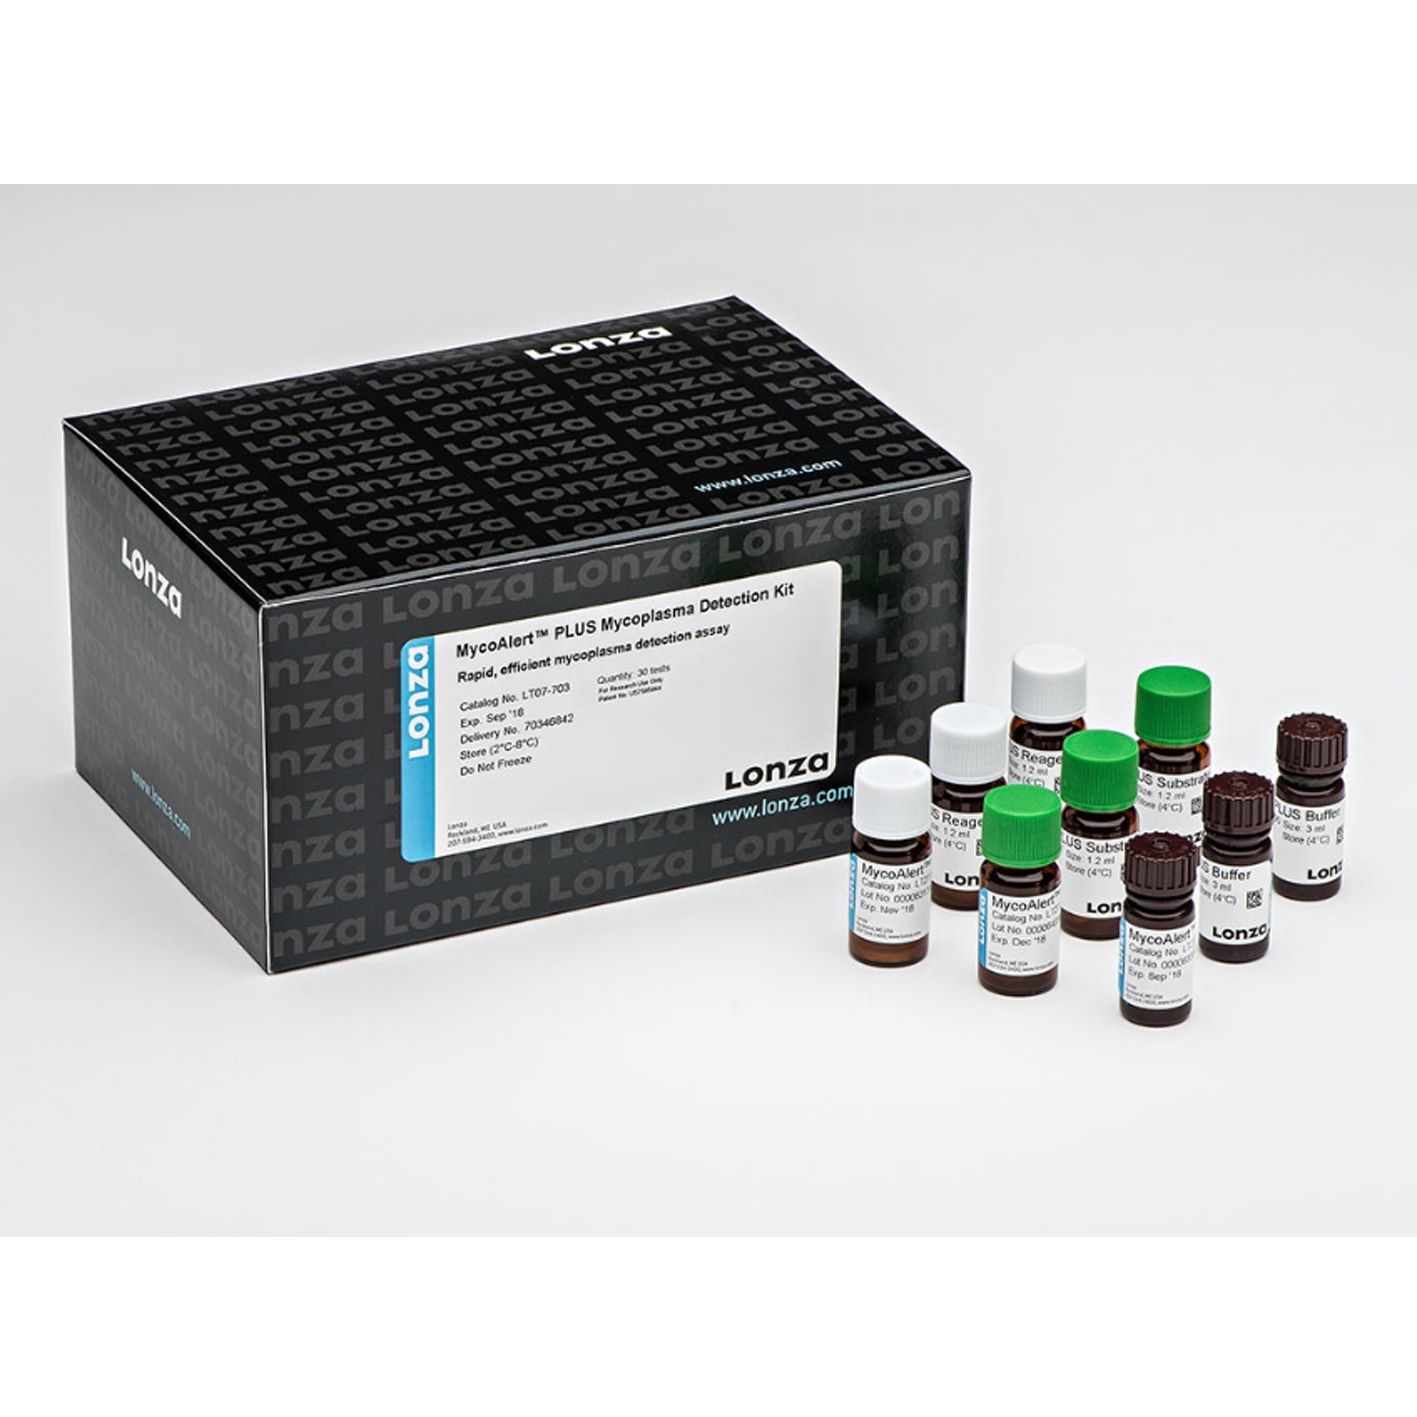 LONZA LT07-703 MycoAlertTM PLUS Mycoplasma Detection Kit (30 Tests)支原体检测试剂盒